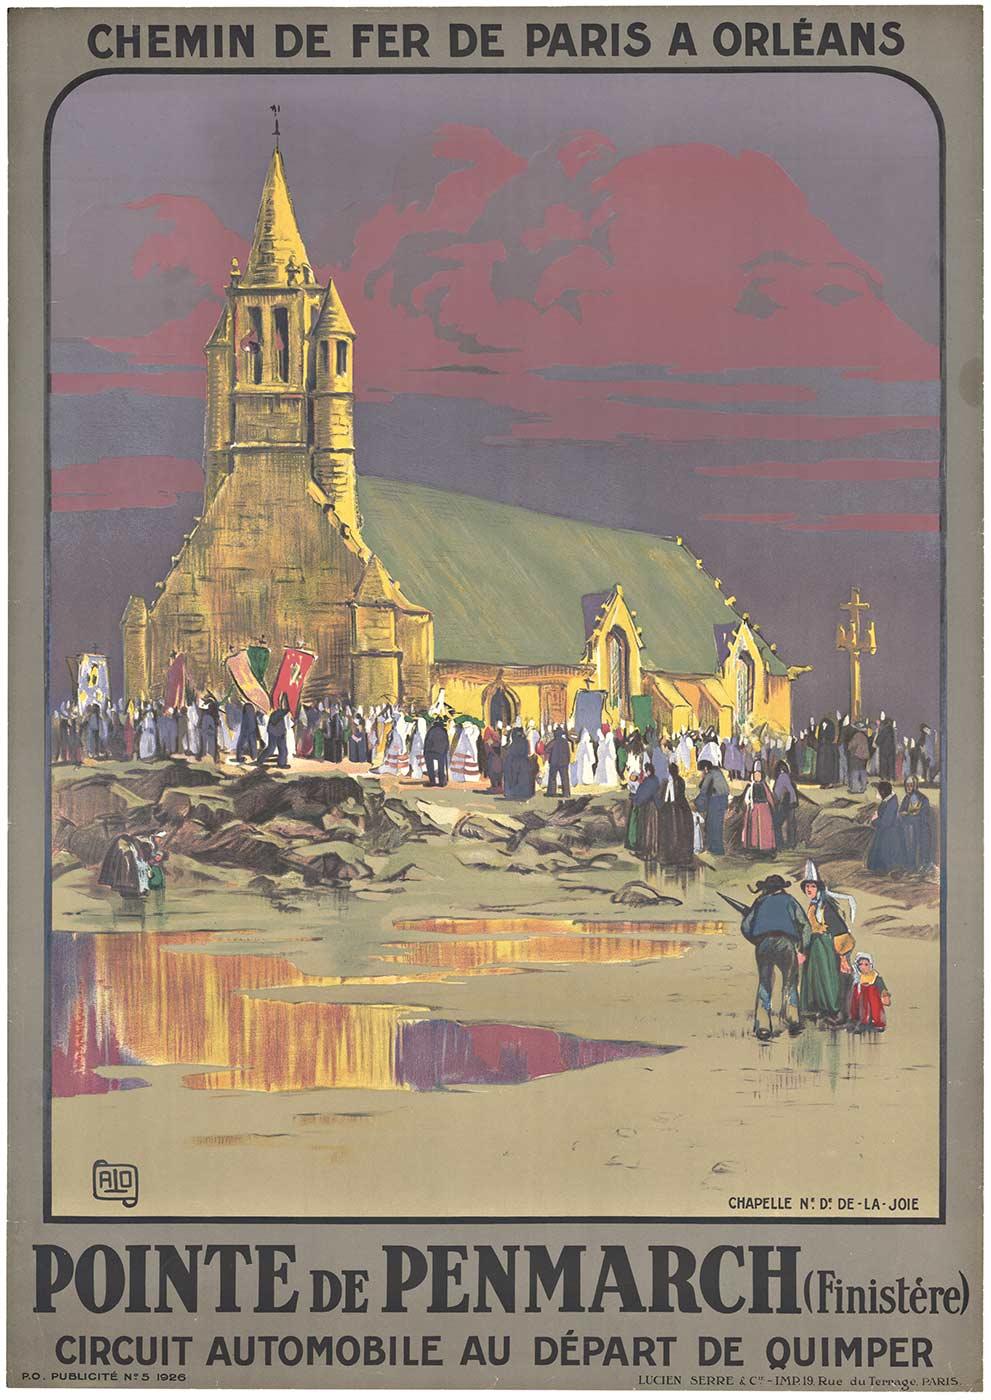 Original Pointe de Penmarch vintage French travel poster